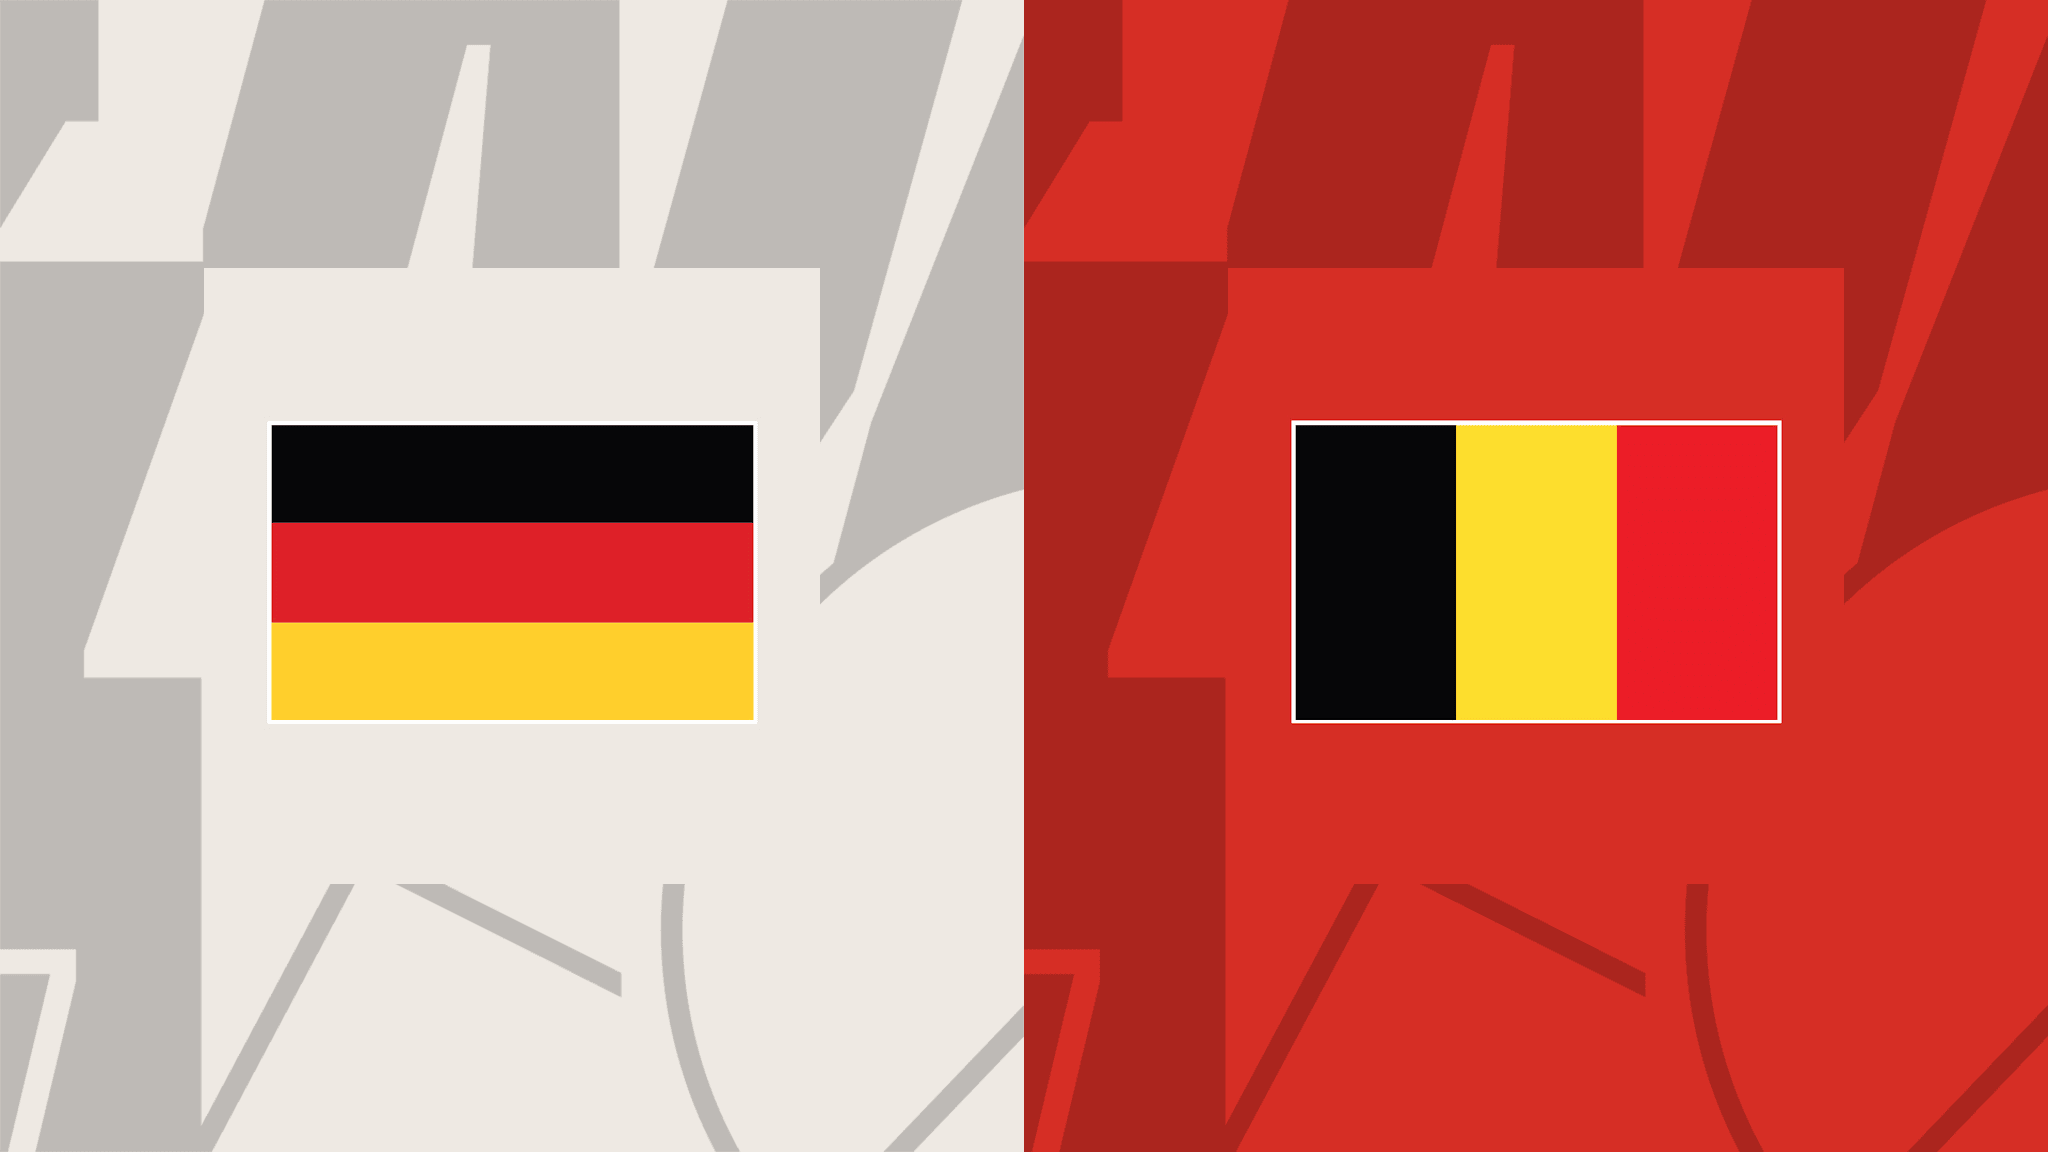  WORLD: INTERNATIONAL FRIENDLIES Germany vs Belgium Live Score and Live Stream